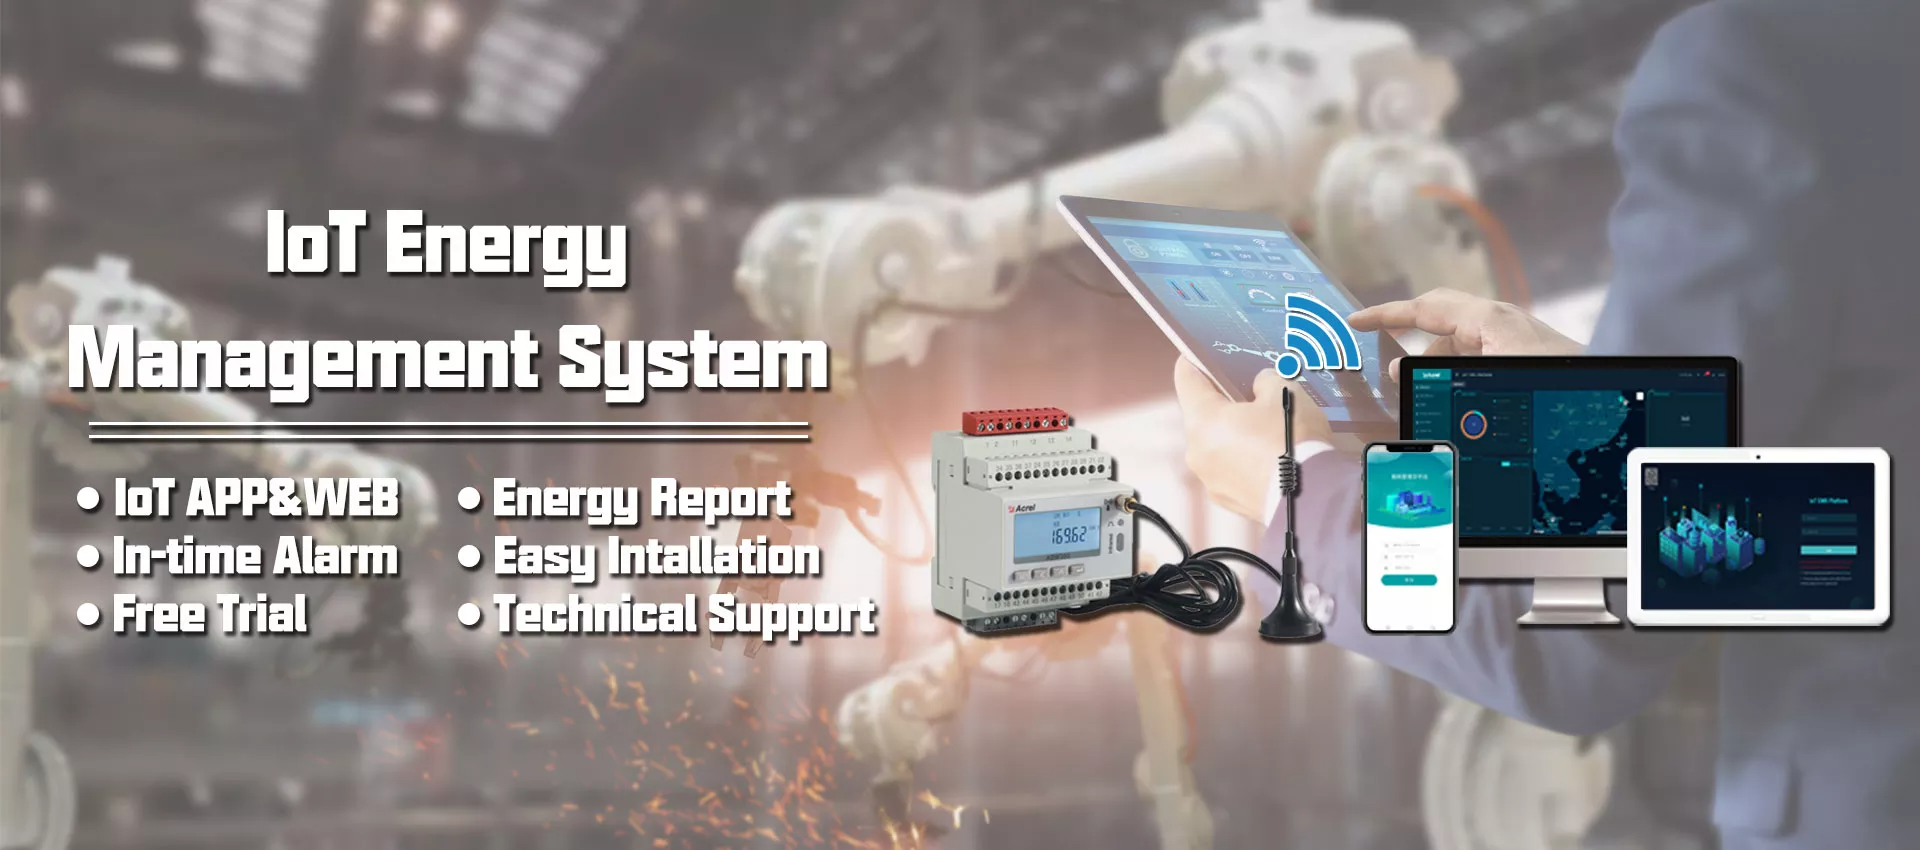 Acrel300 Iot Energy Managment System